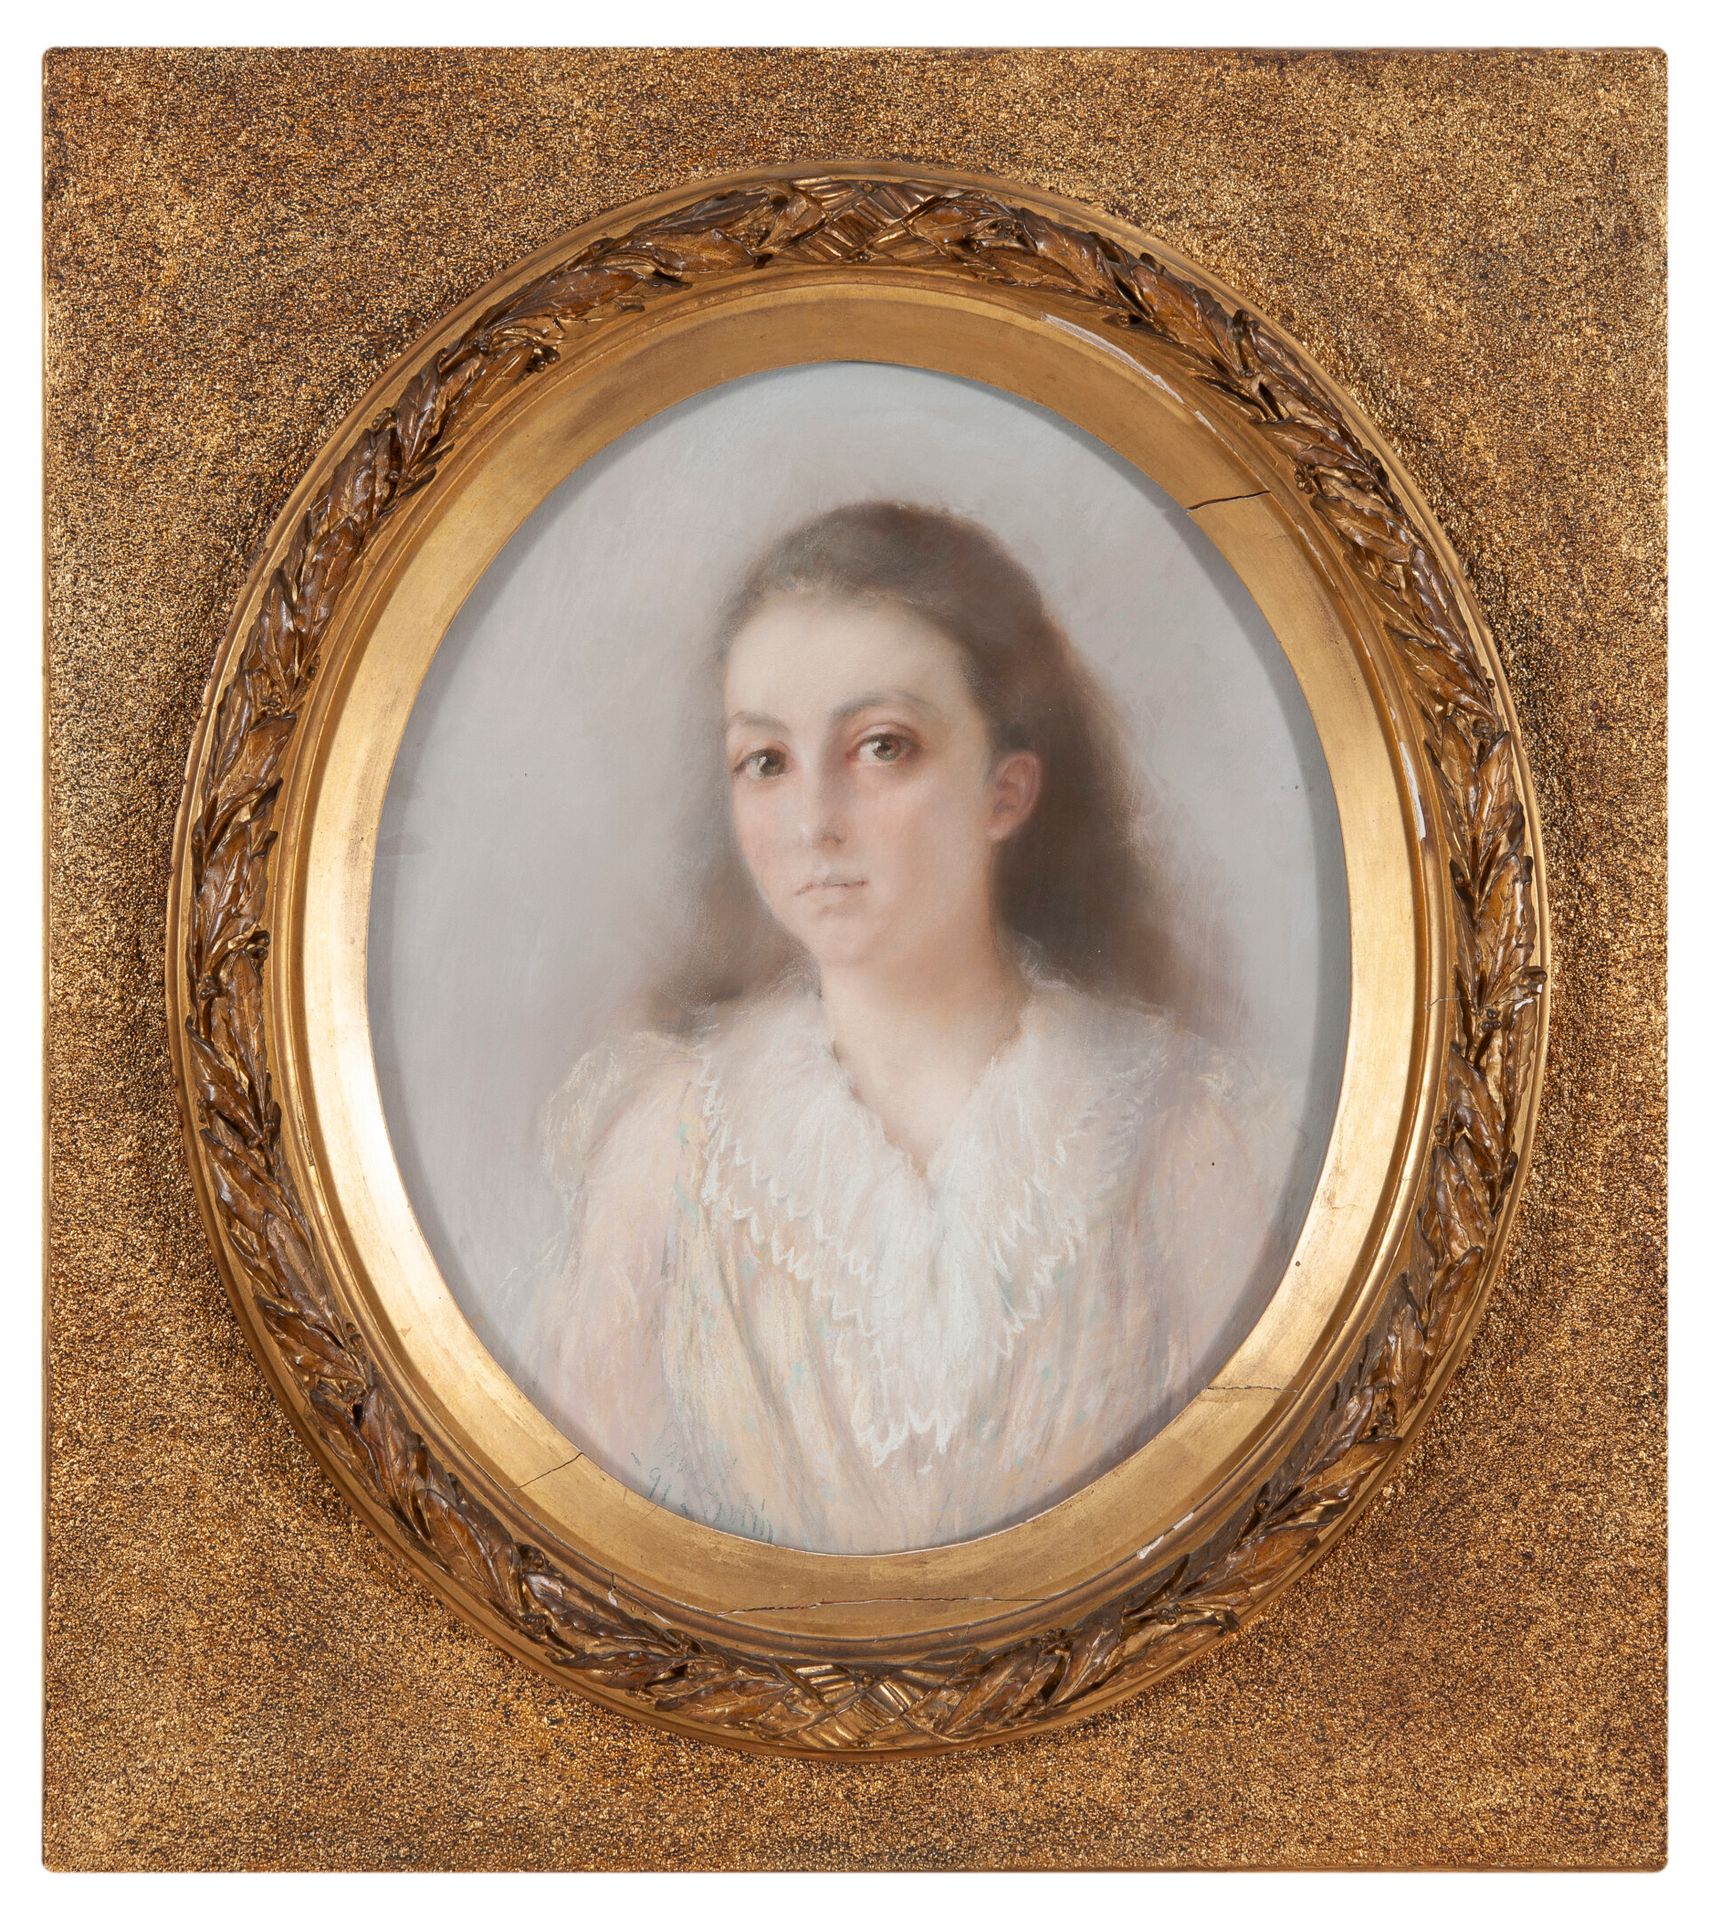 Paul ANTIN (1863-1930) 一个年轻女孩的画像。

长方形纸上的粉笔画，有椭圆形的视图。帆布和担架上的Marouflé。

左下方有签名和日期&hellip;